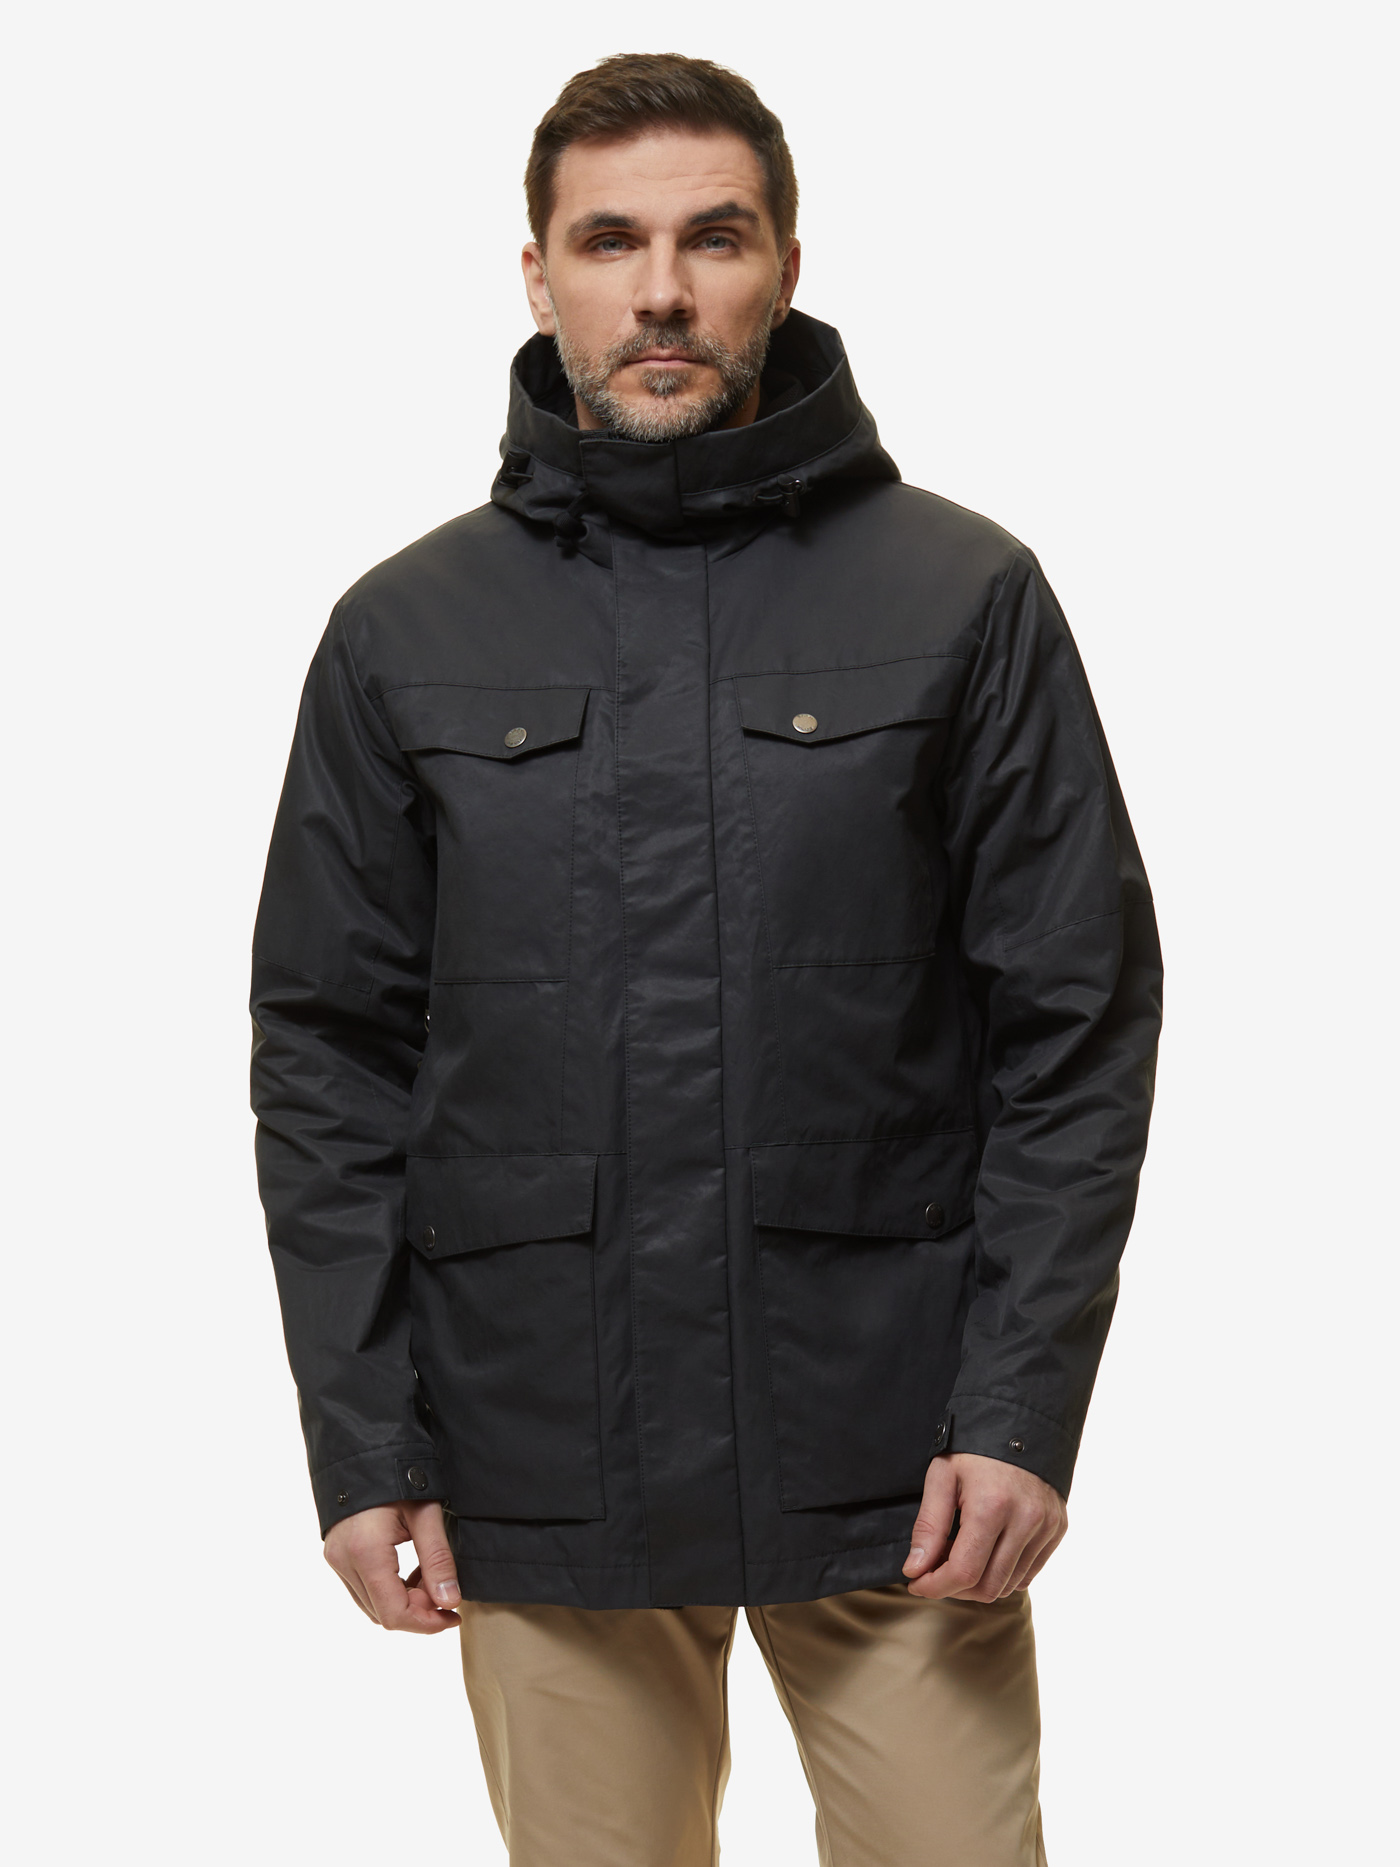 Куртка BASK, размер 50, цвет антрацит 22014-9674-050 Quebec v2 - фото 2